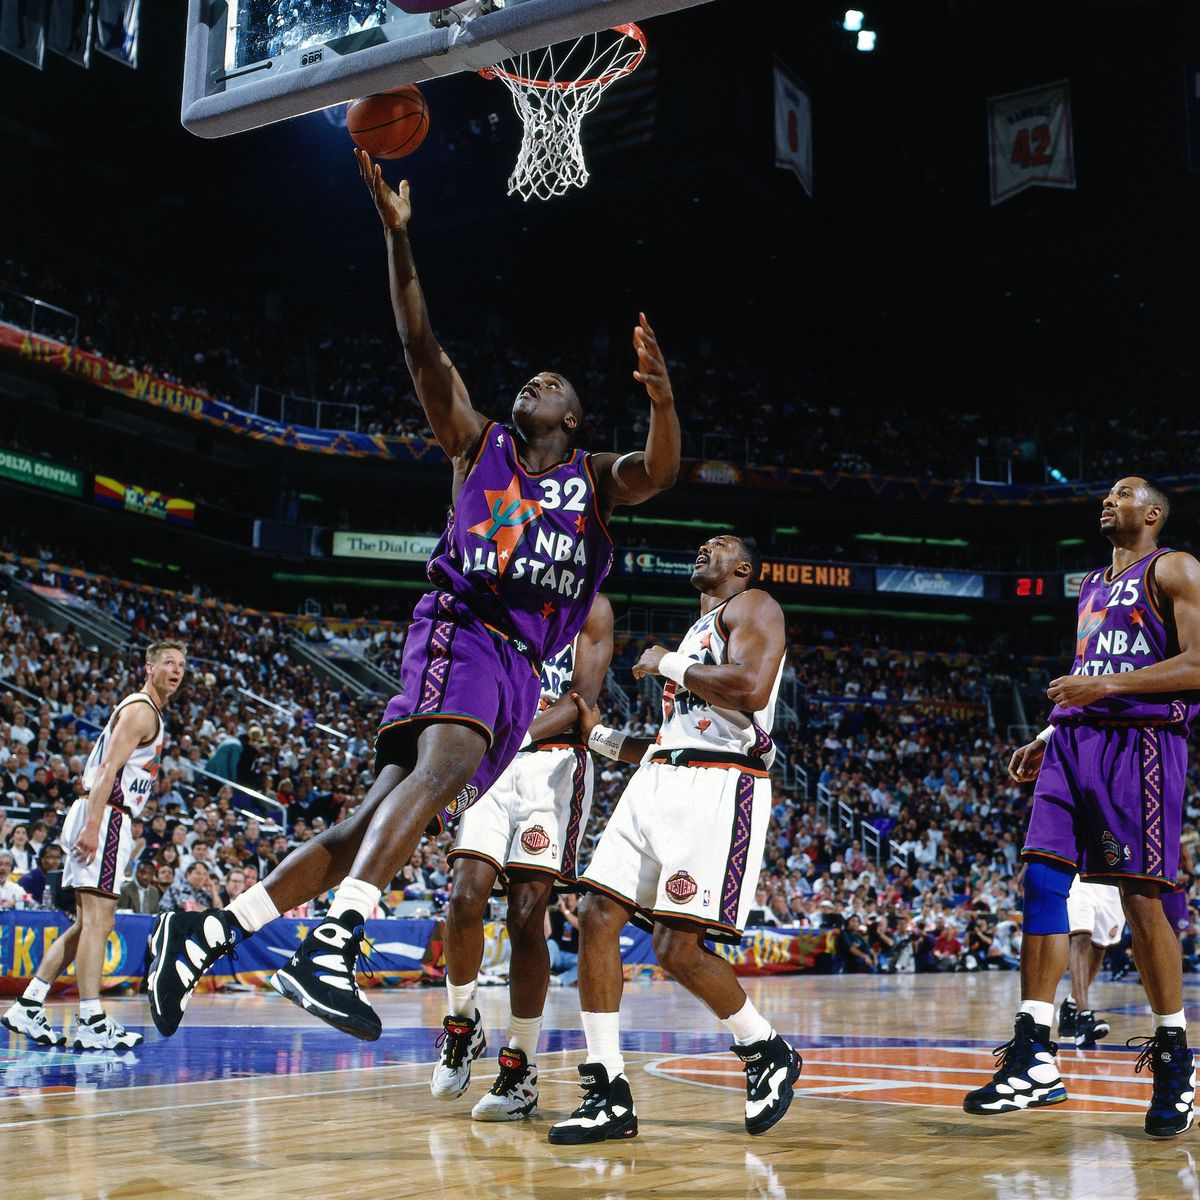 1995 NBA All-Star Game